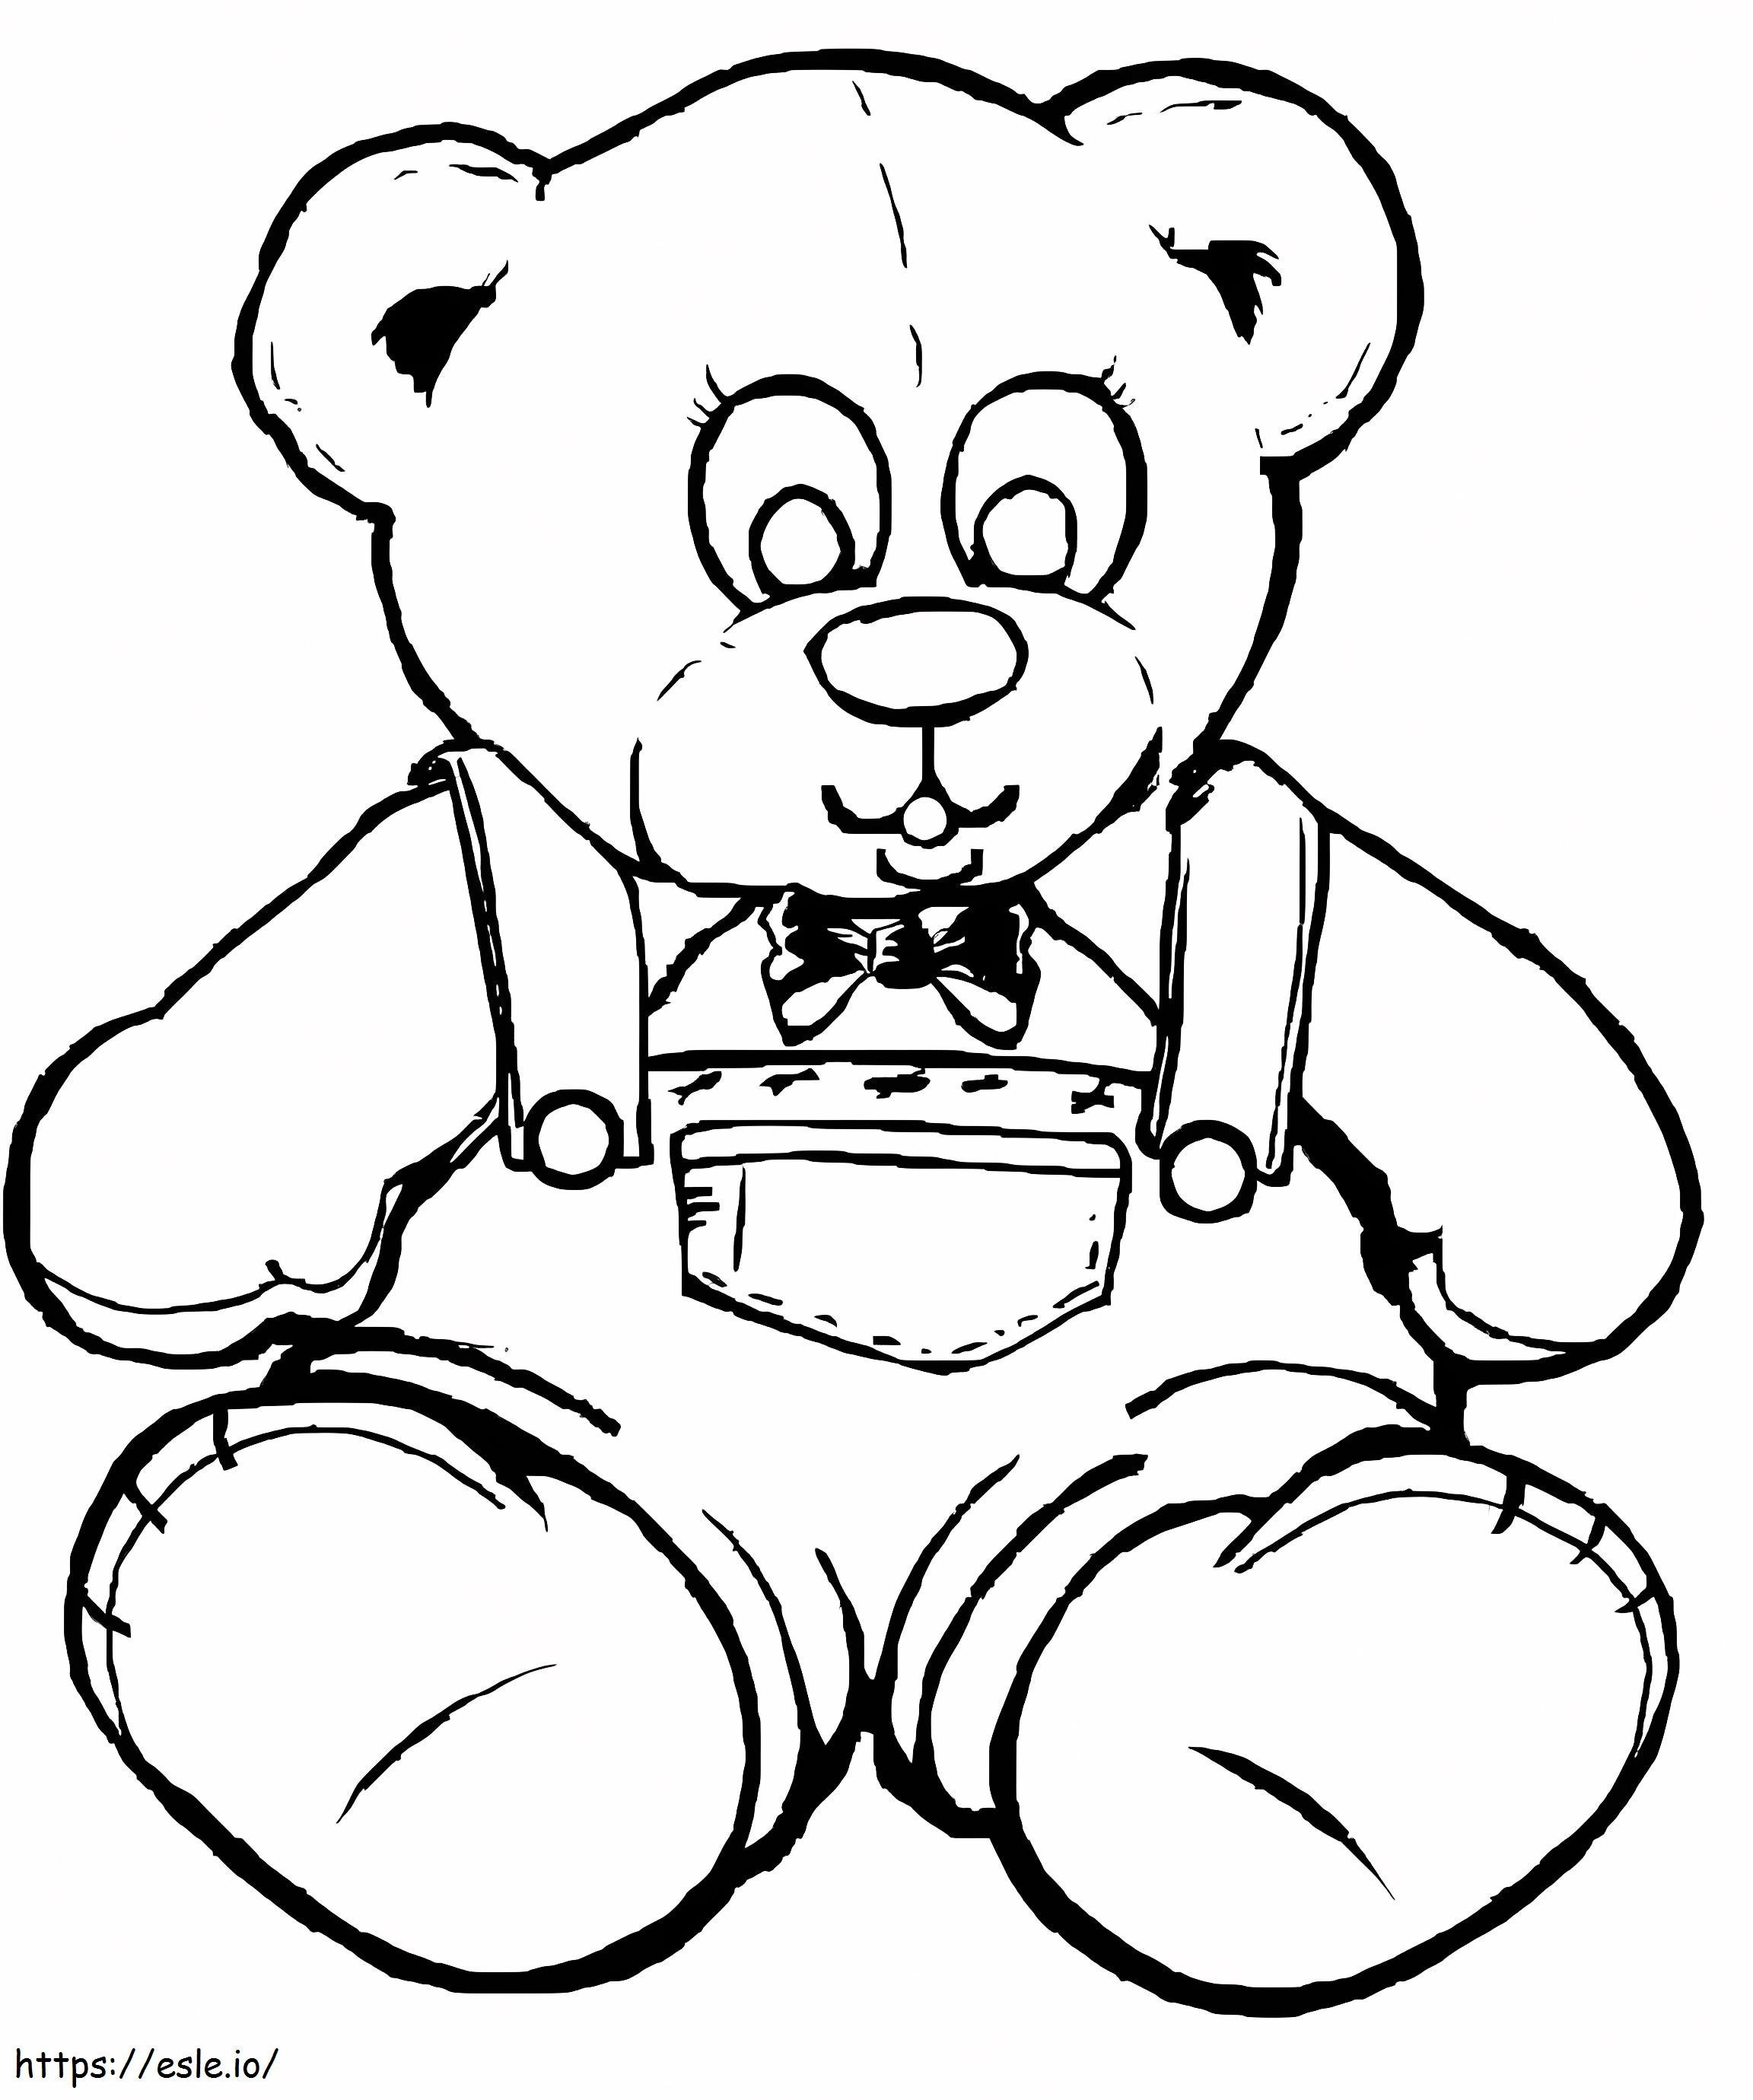 Teddybär zum ausdrucken ausmalbilder